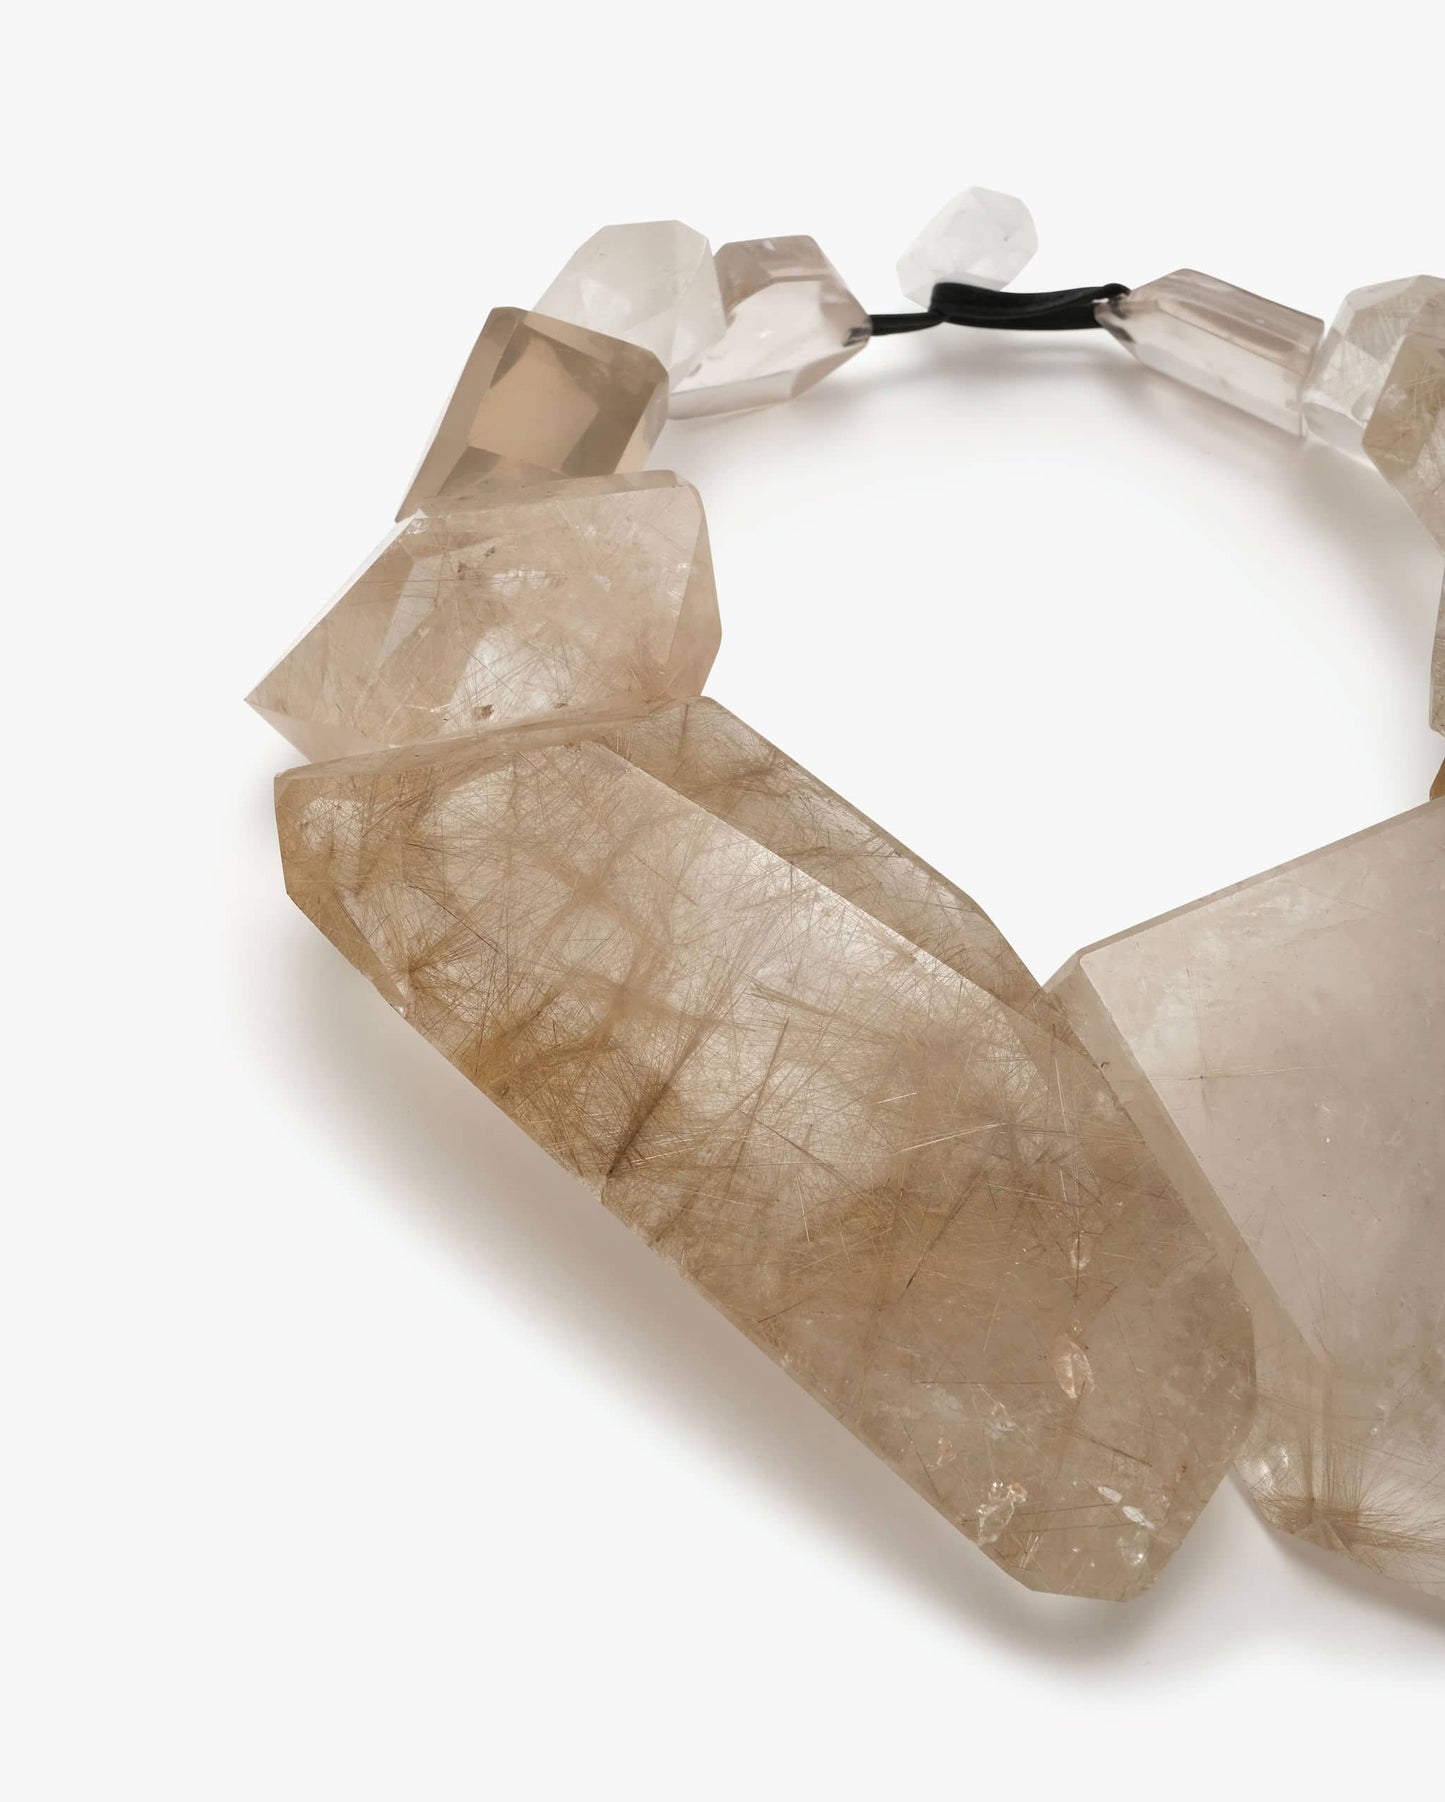 50th anniversary necklace: crystal, quartz